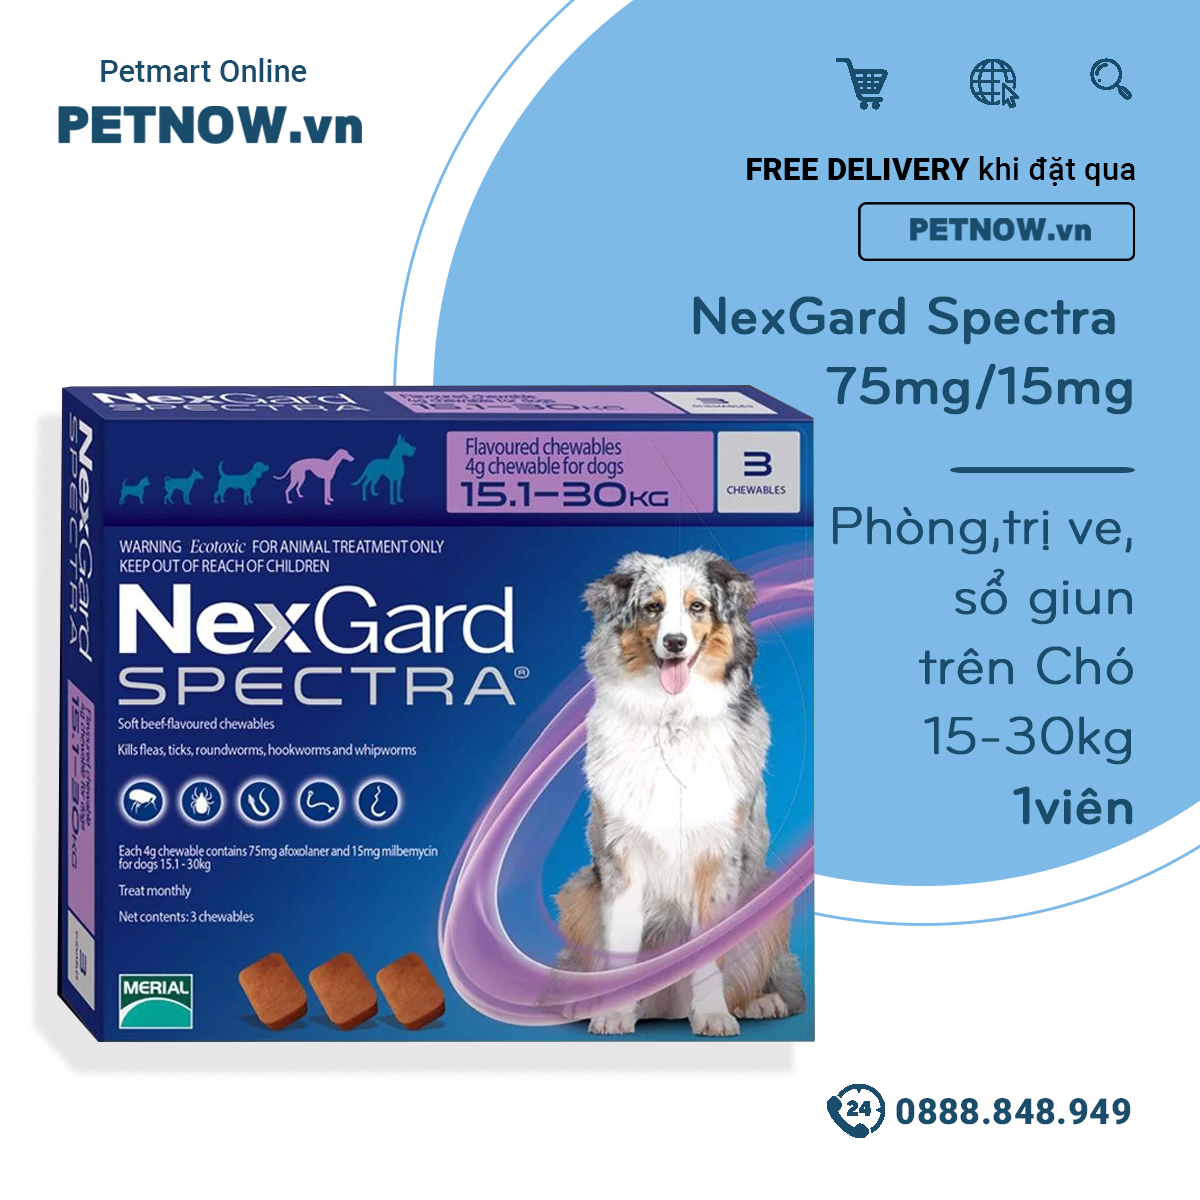 NexGard Spectra 75mg/15mg Phòng, trị ve, sổ giun trên Chó 15-30kg - 1viên petnow